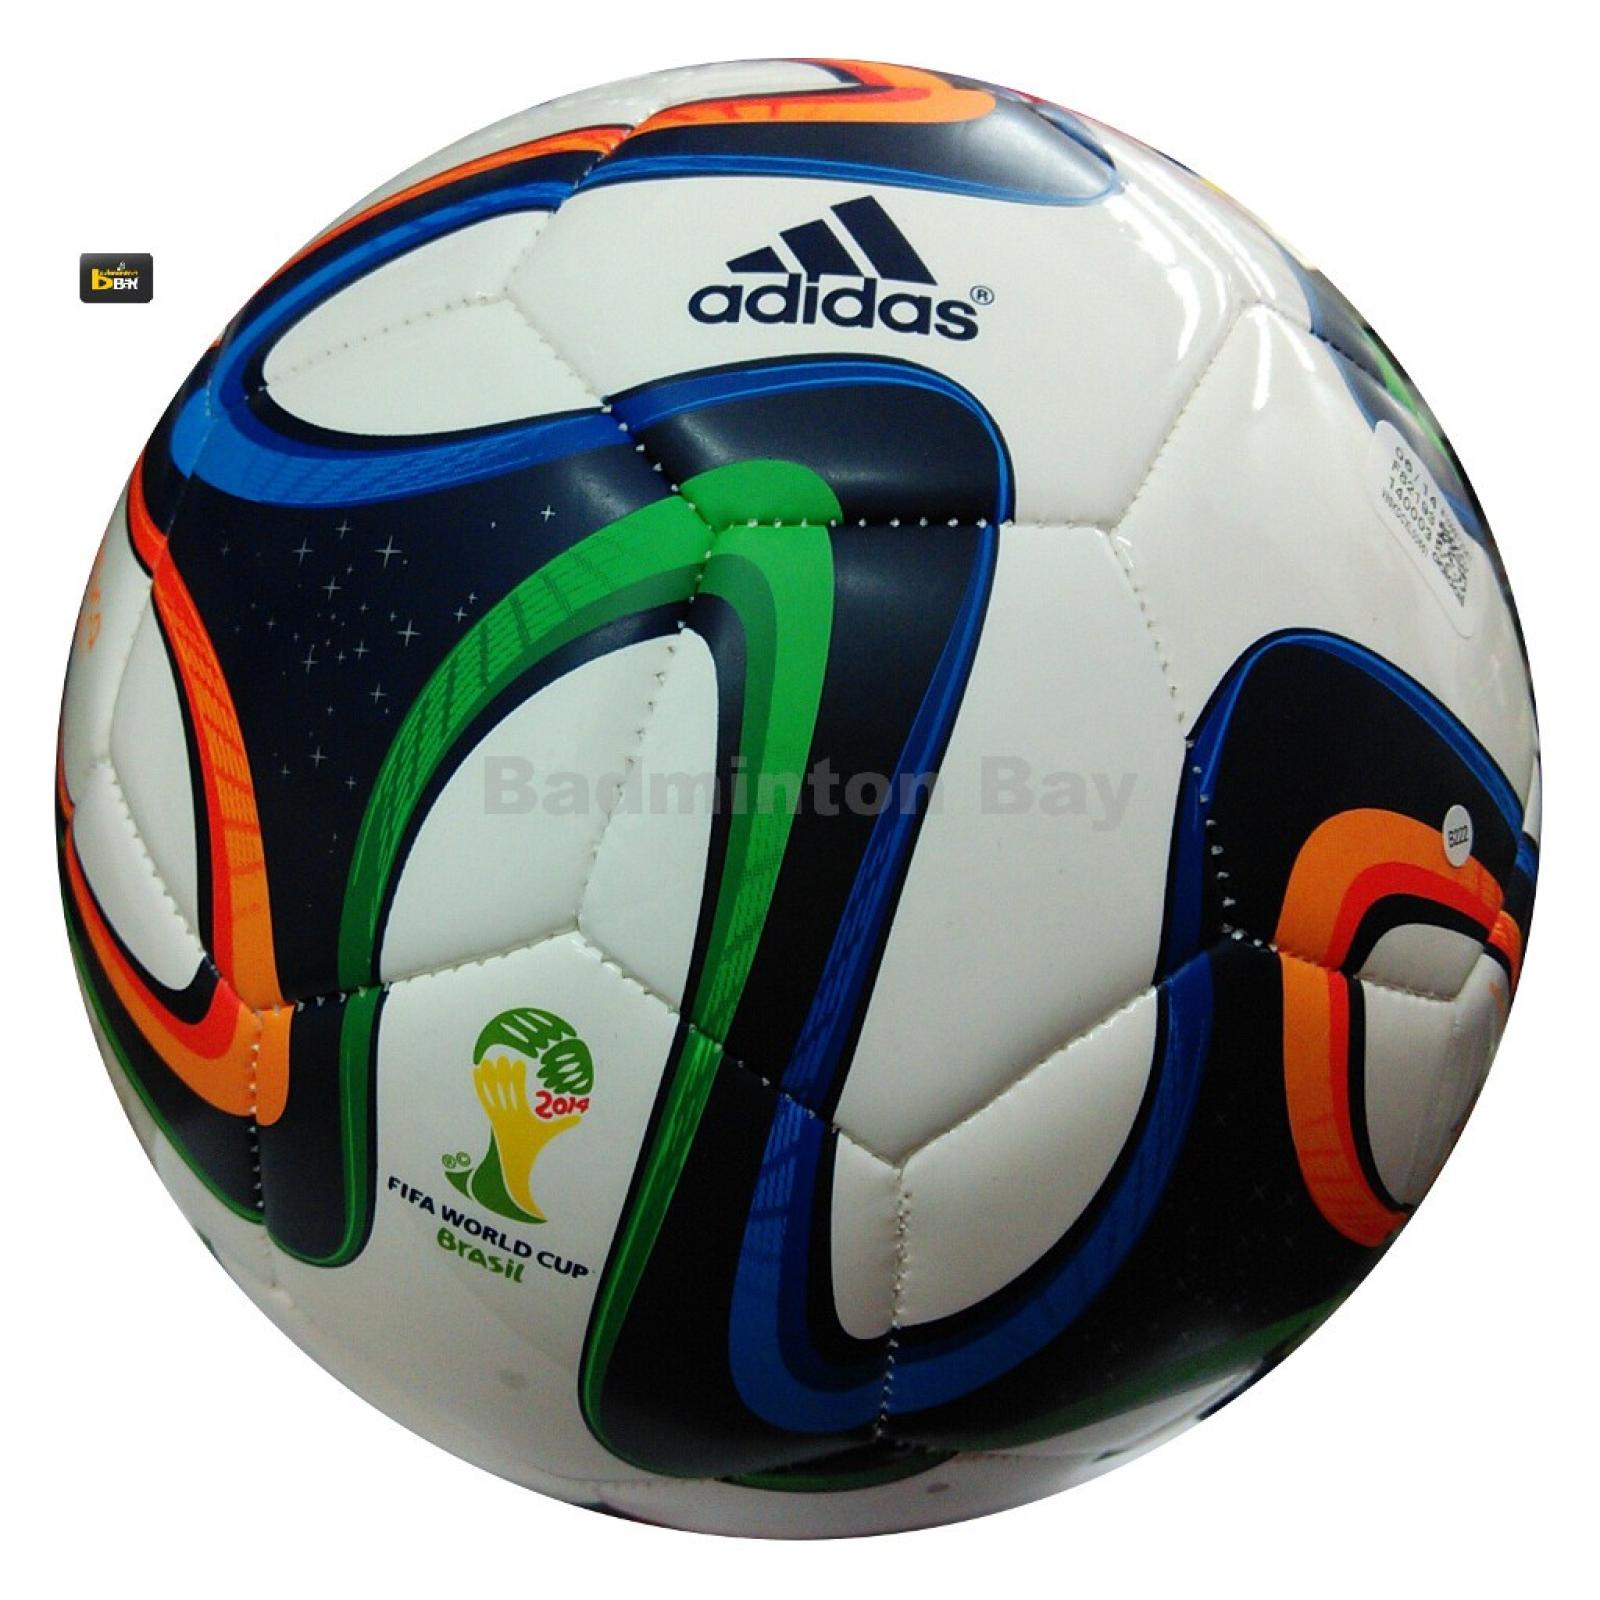 https://www.badmintonbay.com/image/cache/data/Adidas/Football/adidas-brazuca-glider-blue-size5-02-1600x1600.jpg